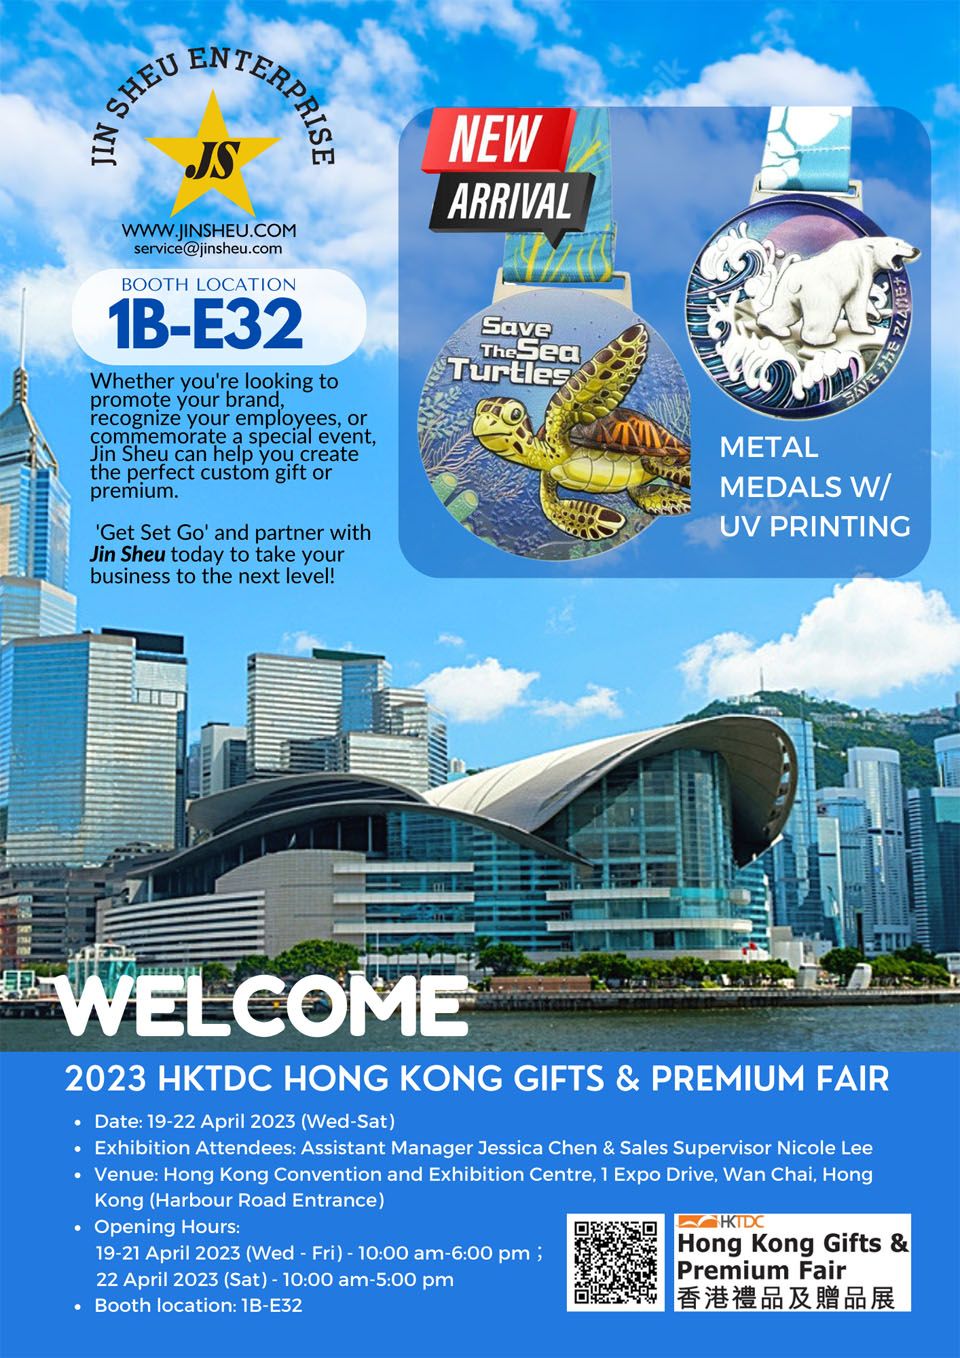 Feira de Presentes e Produtos Premium da HKTDC 2023